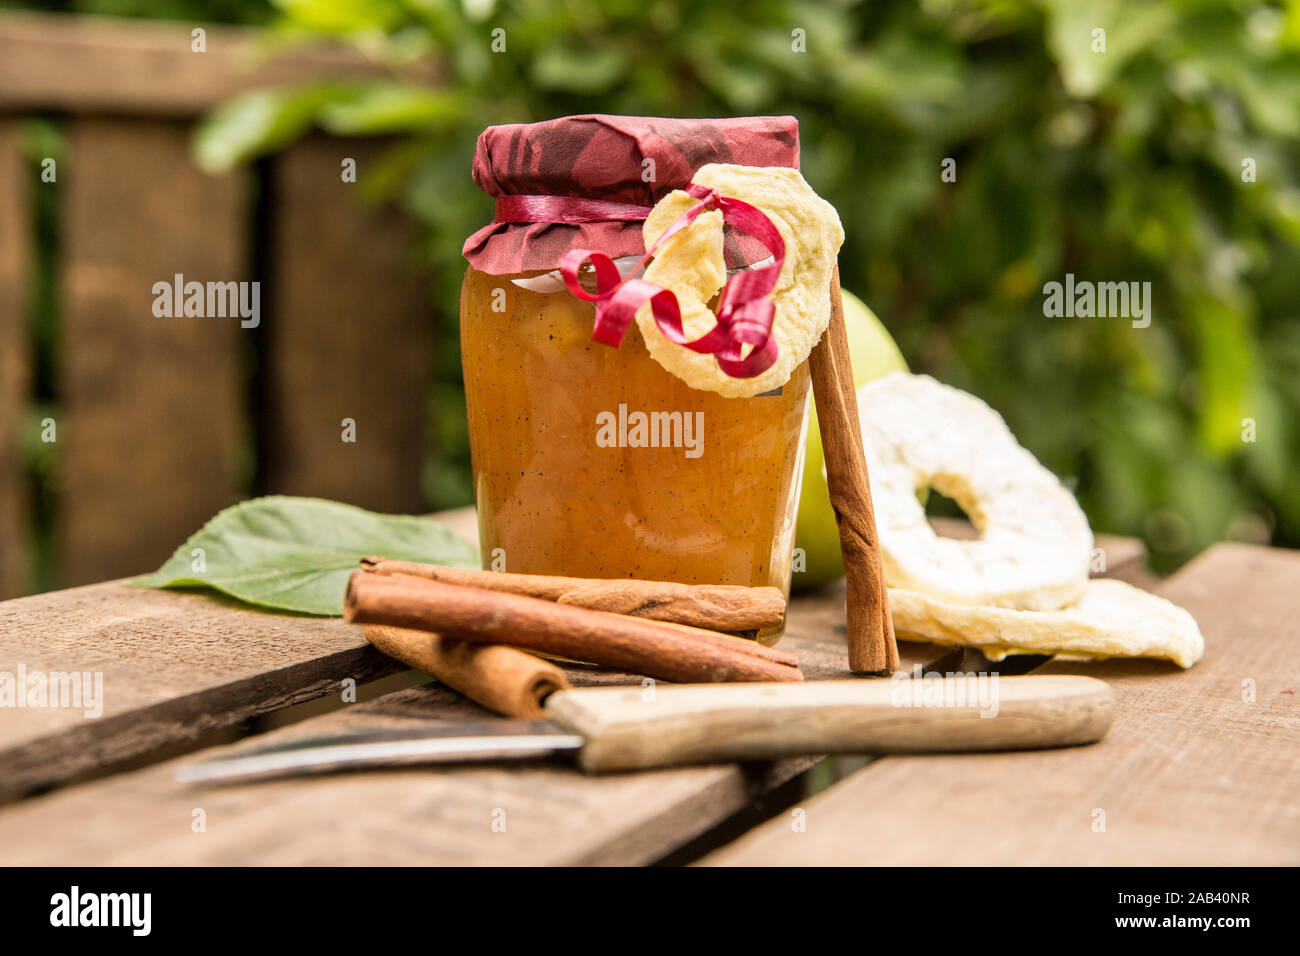 Ein Glas mit Apfelkonfitüre mit Zimtstangen auf einer Obstkiste |Un bicchiere di marmellata di mele con bastoncini di cannella su una cassetta da frutta| Foto Stock